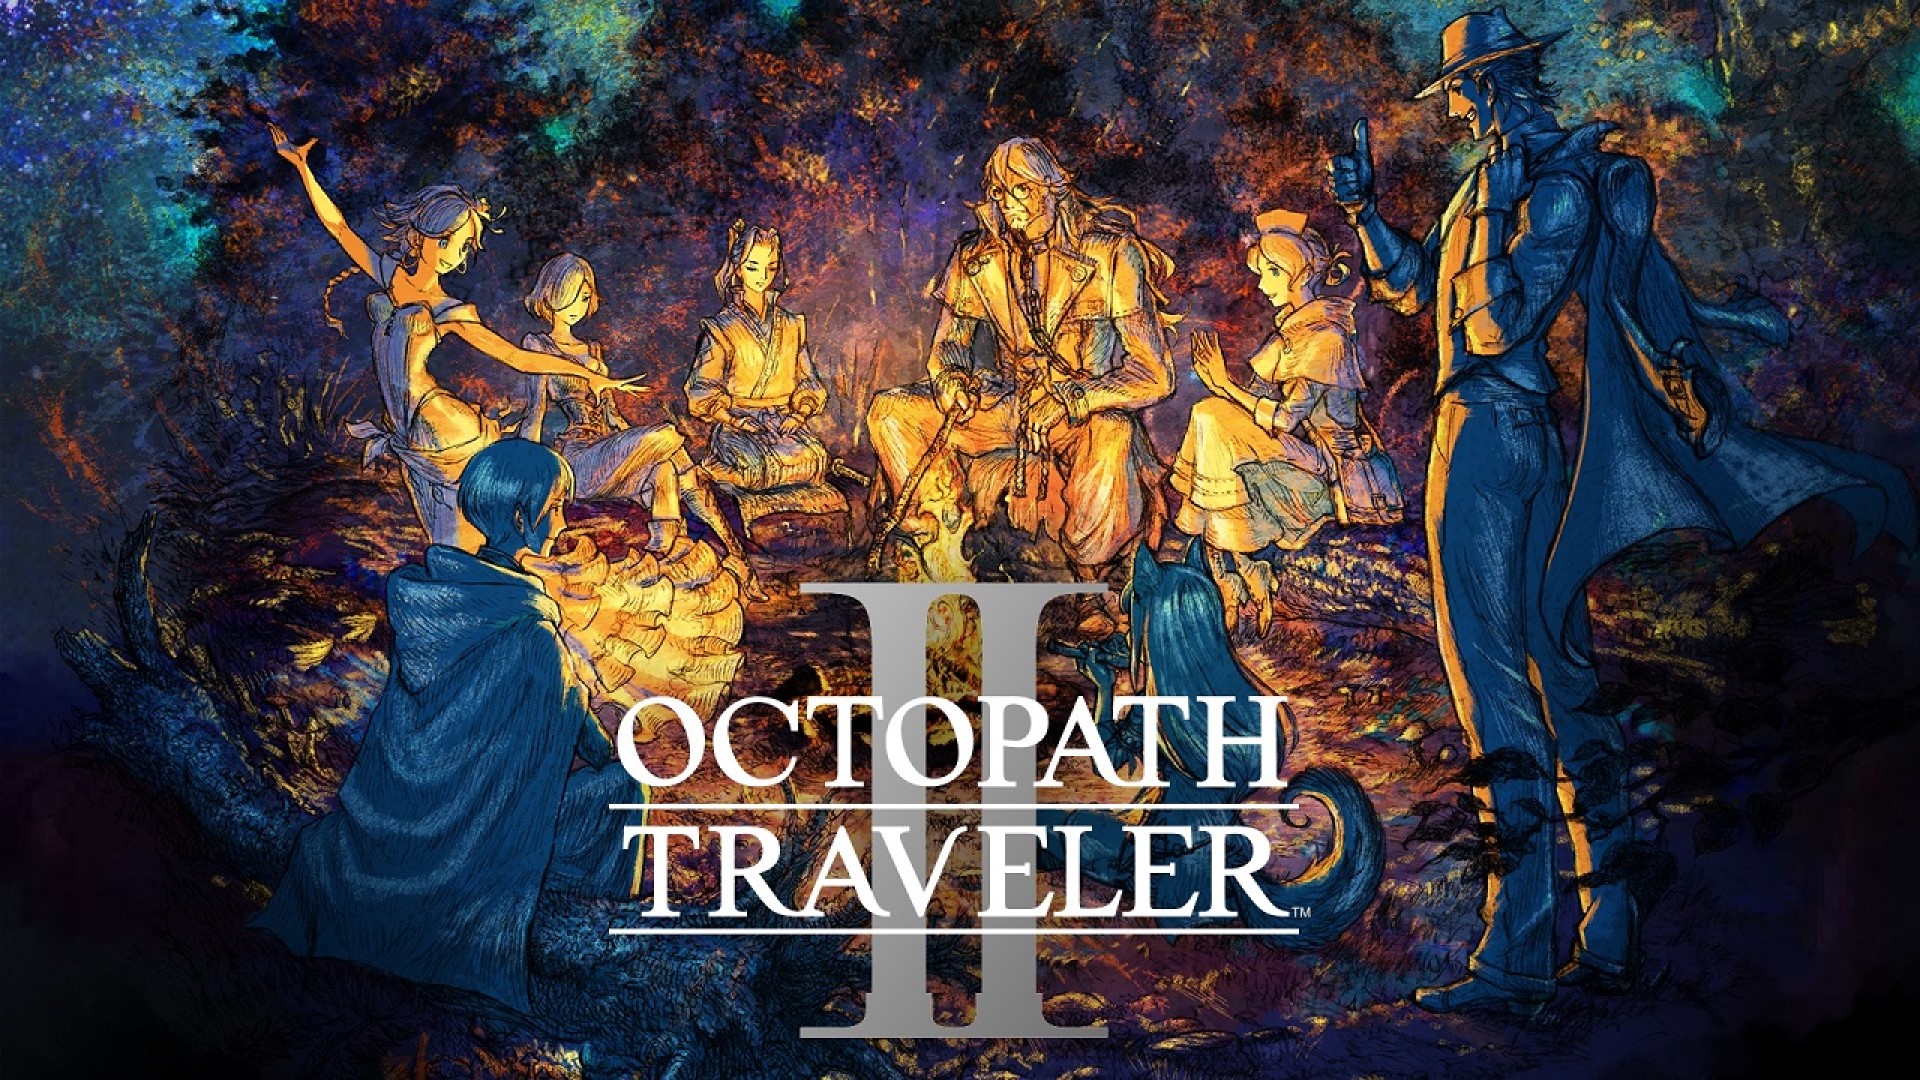 Octopath Traveler 2 มียอดขายทั้งแบบแผ่นและดิจิทัลทะลุ 1 ล้านชุดแล้ว